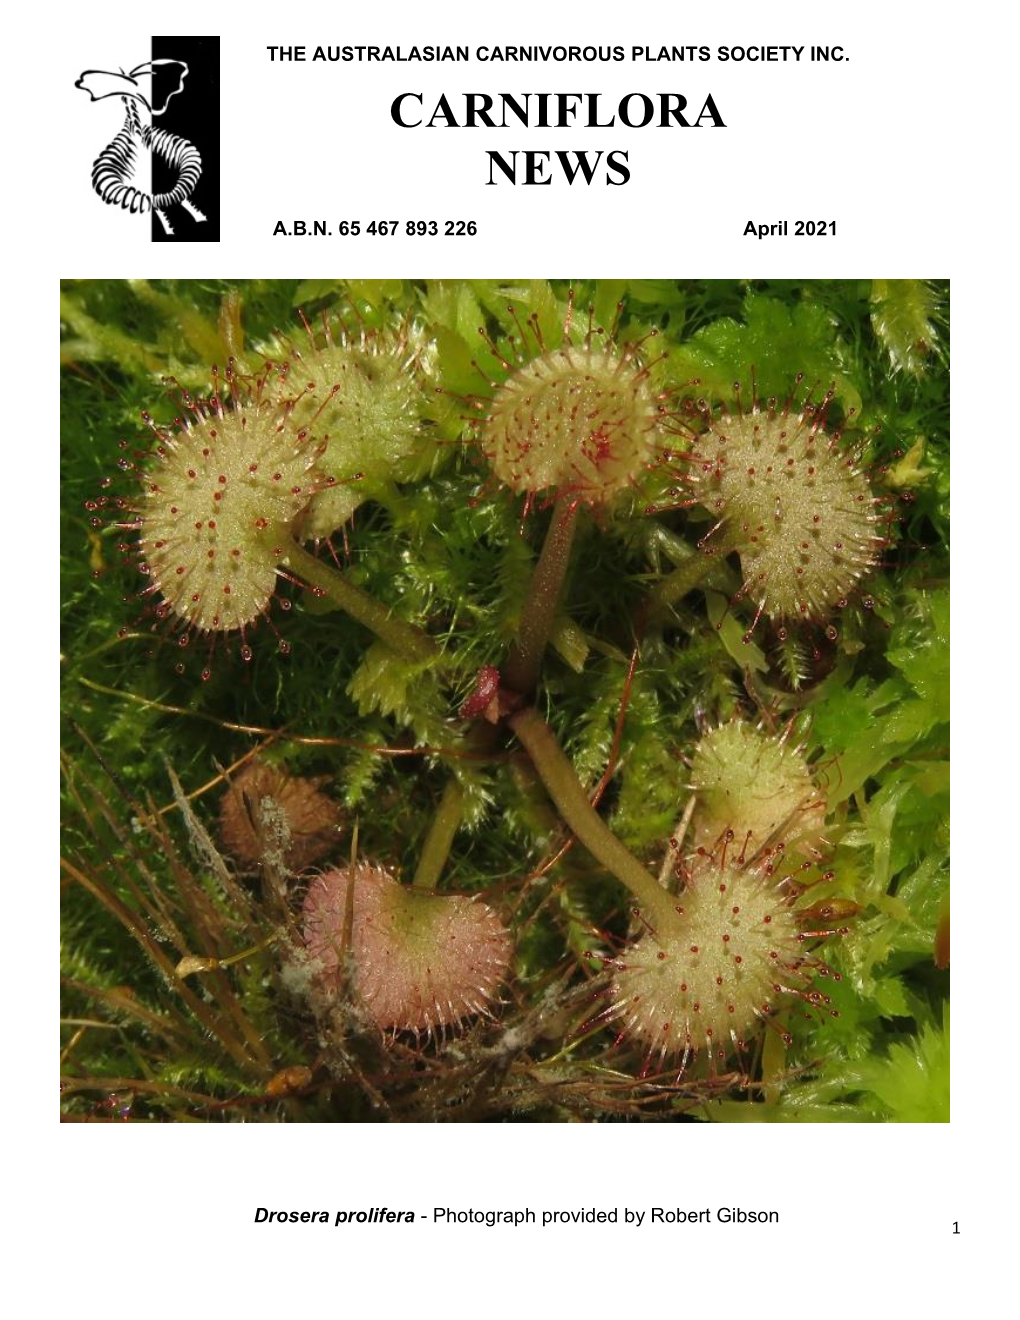 Carniflora News – April 2021